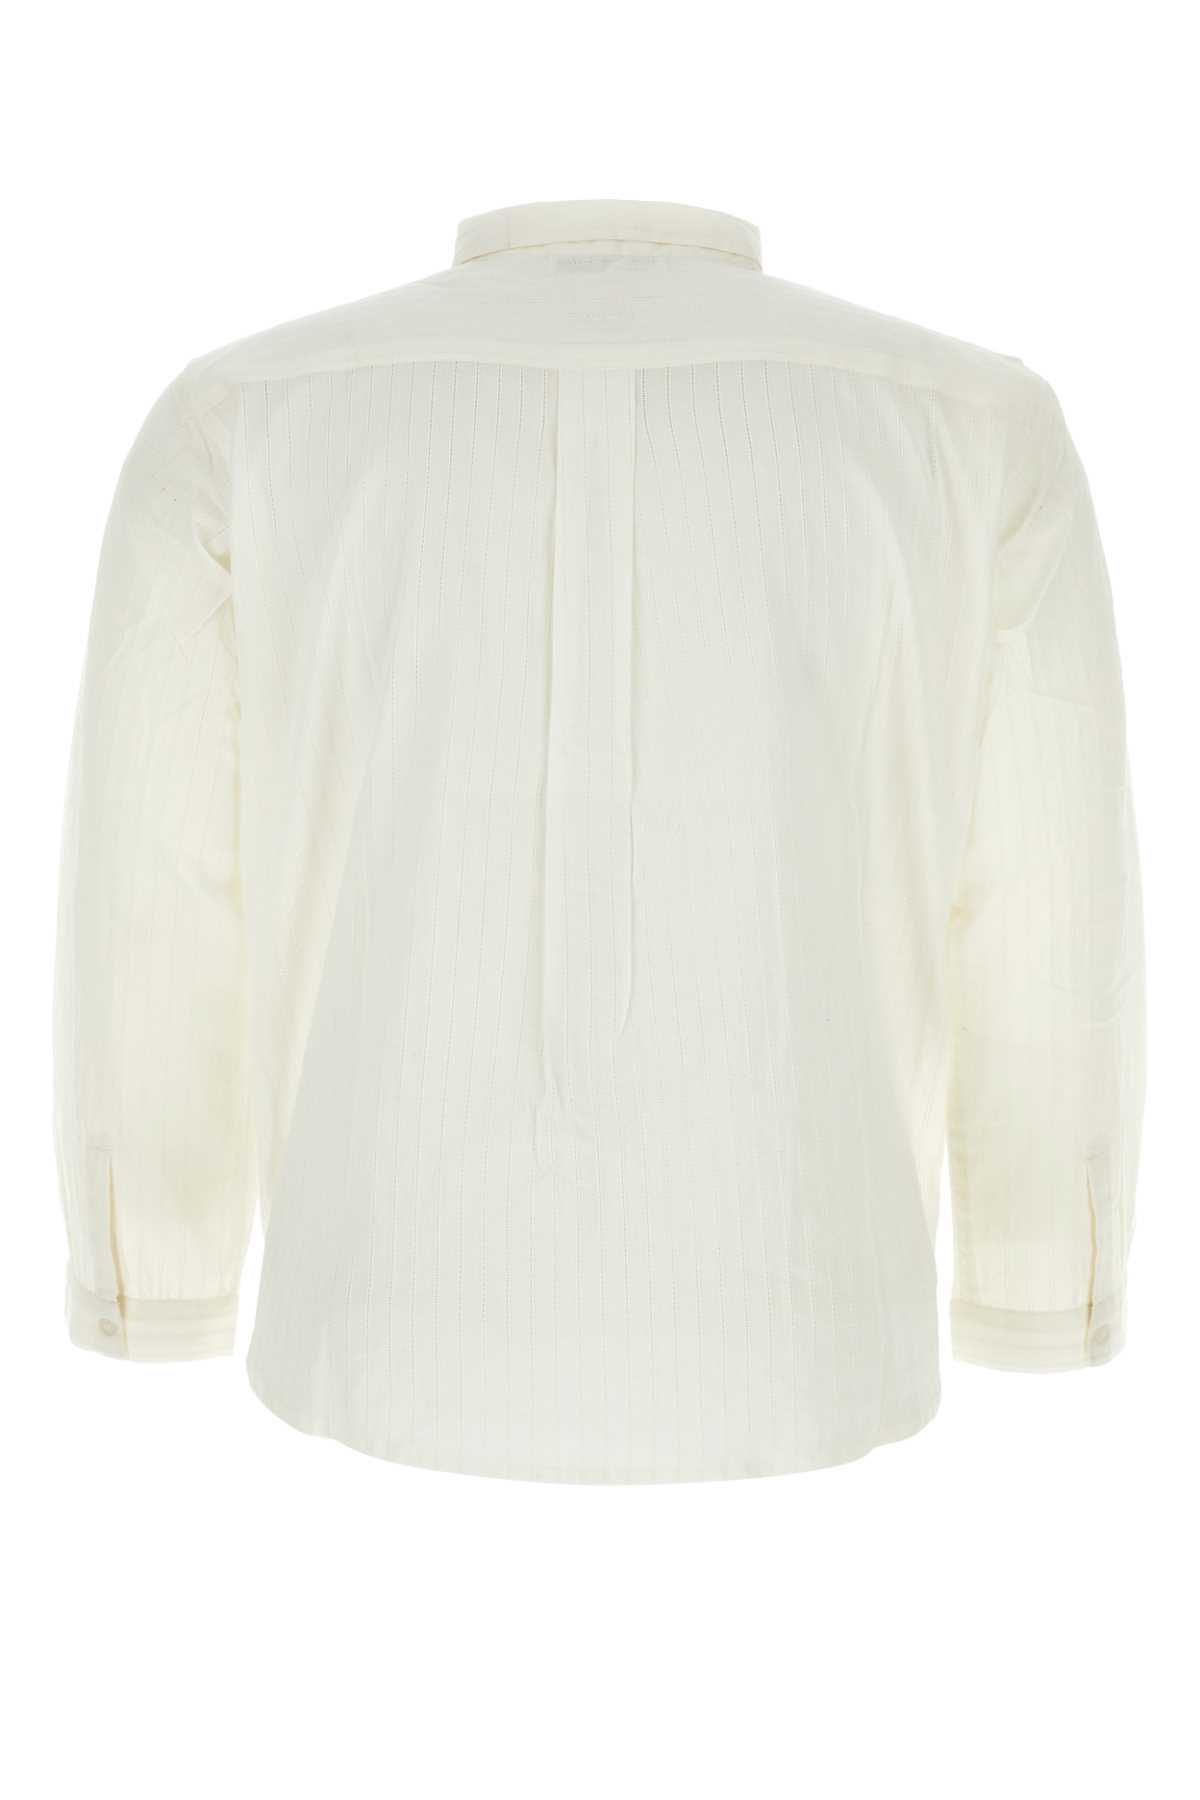 Gimaguas White Cotton Oversize Beau Shirt